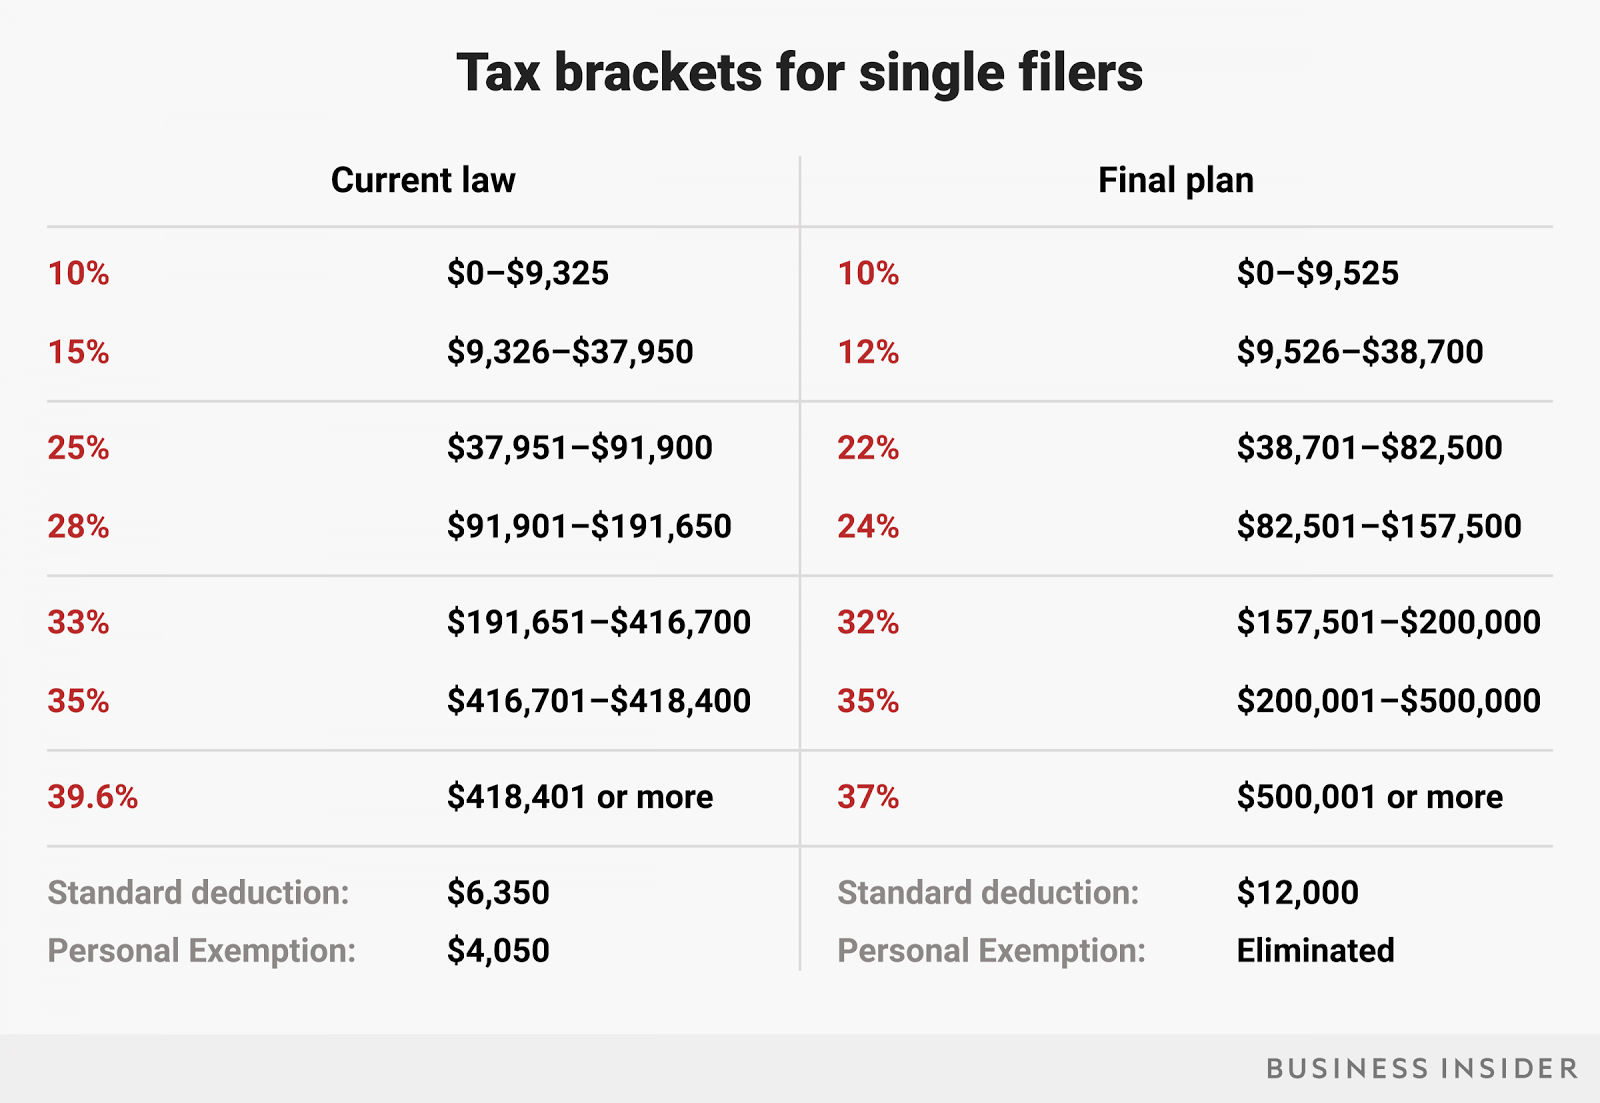 Tax brackets for single filers chart